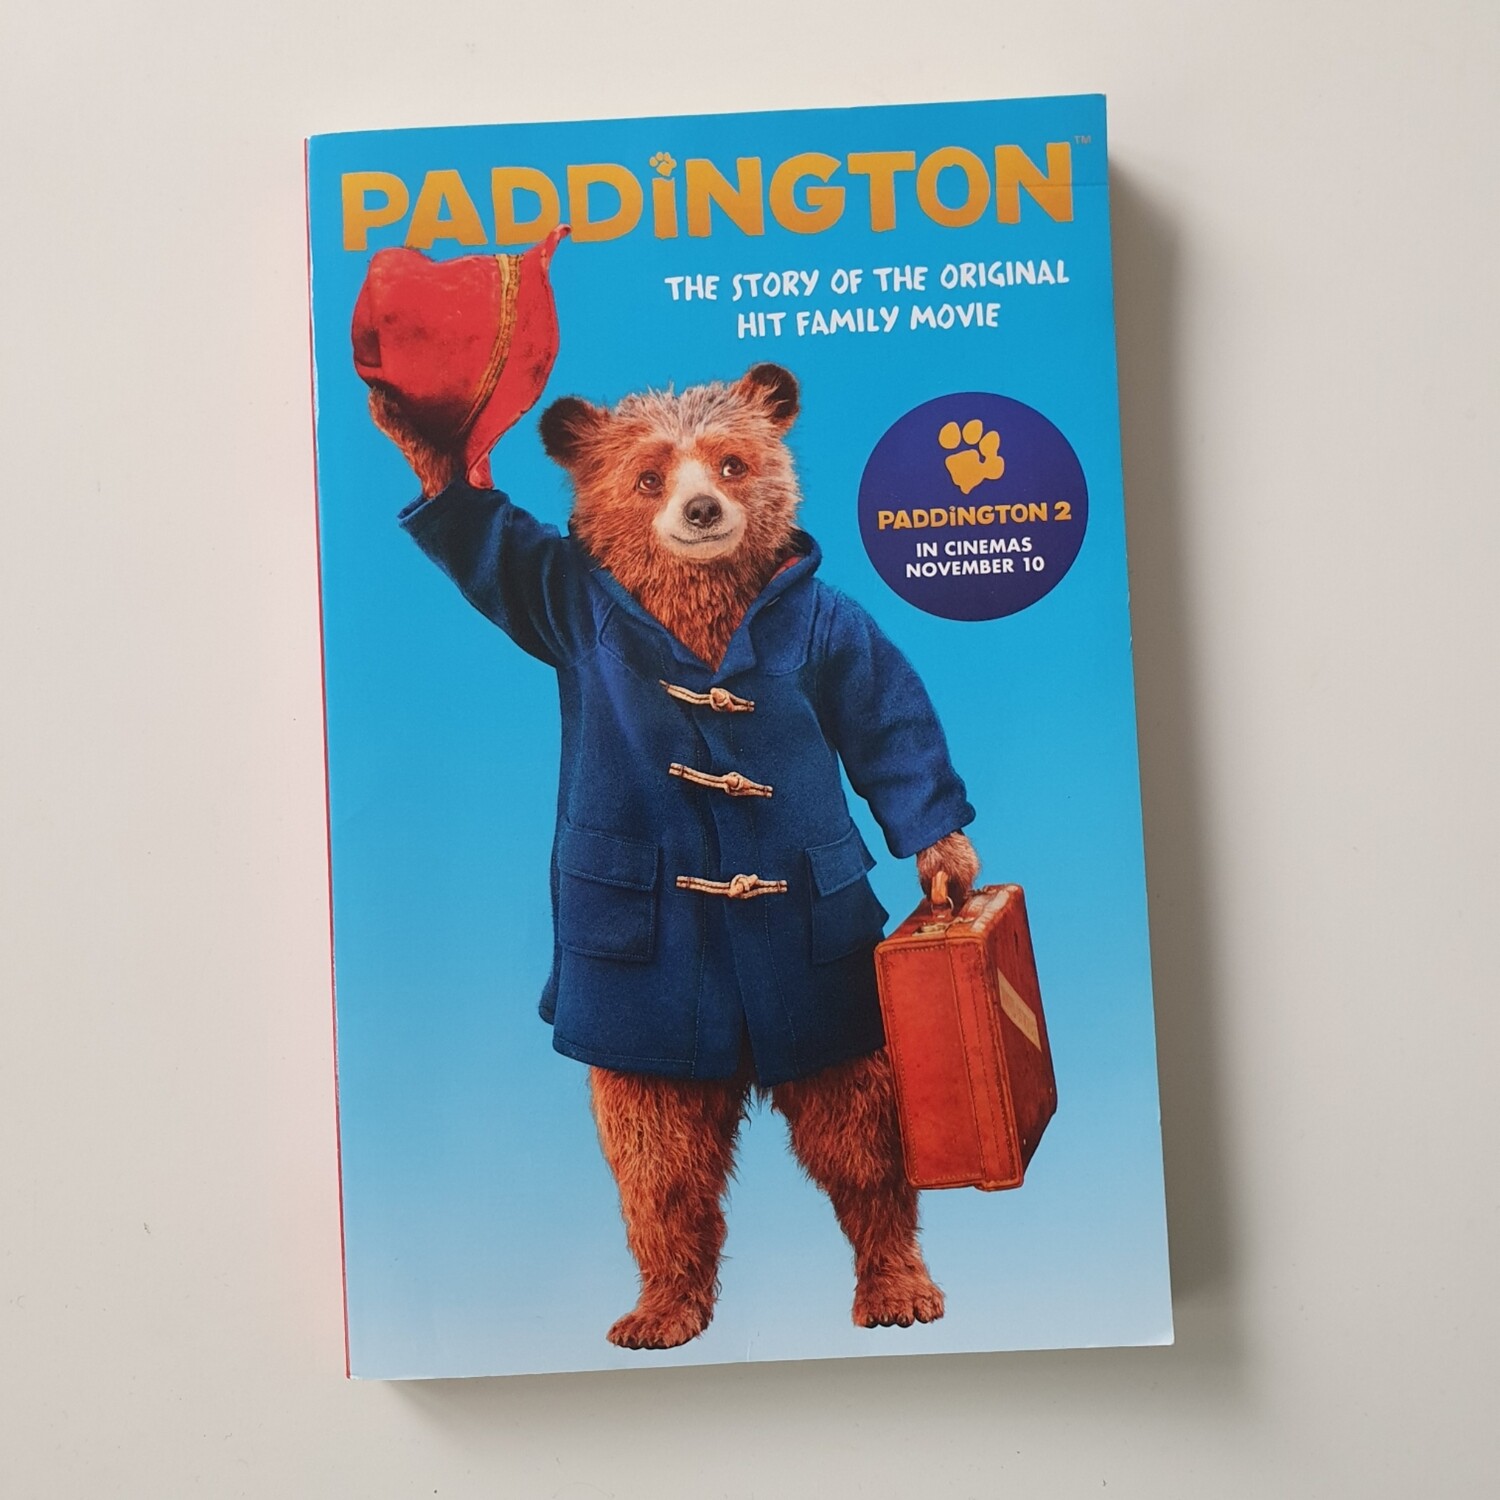 Paddington - made from a paperback book